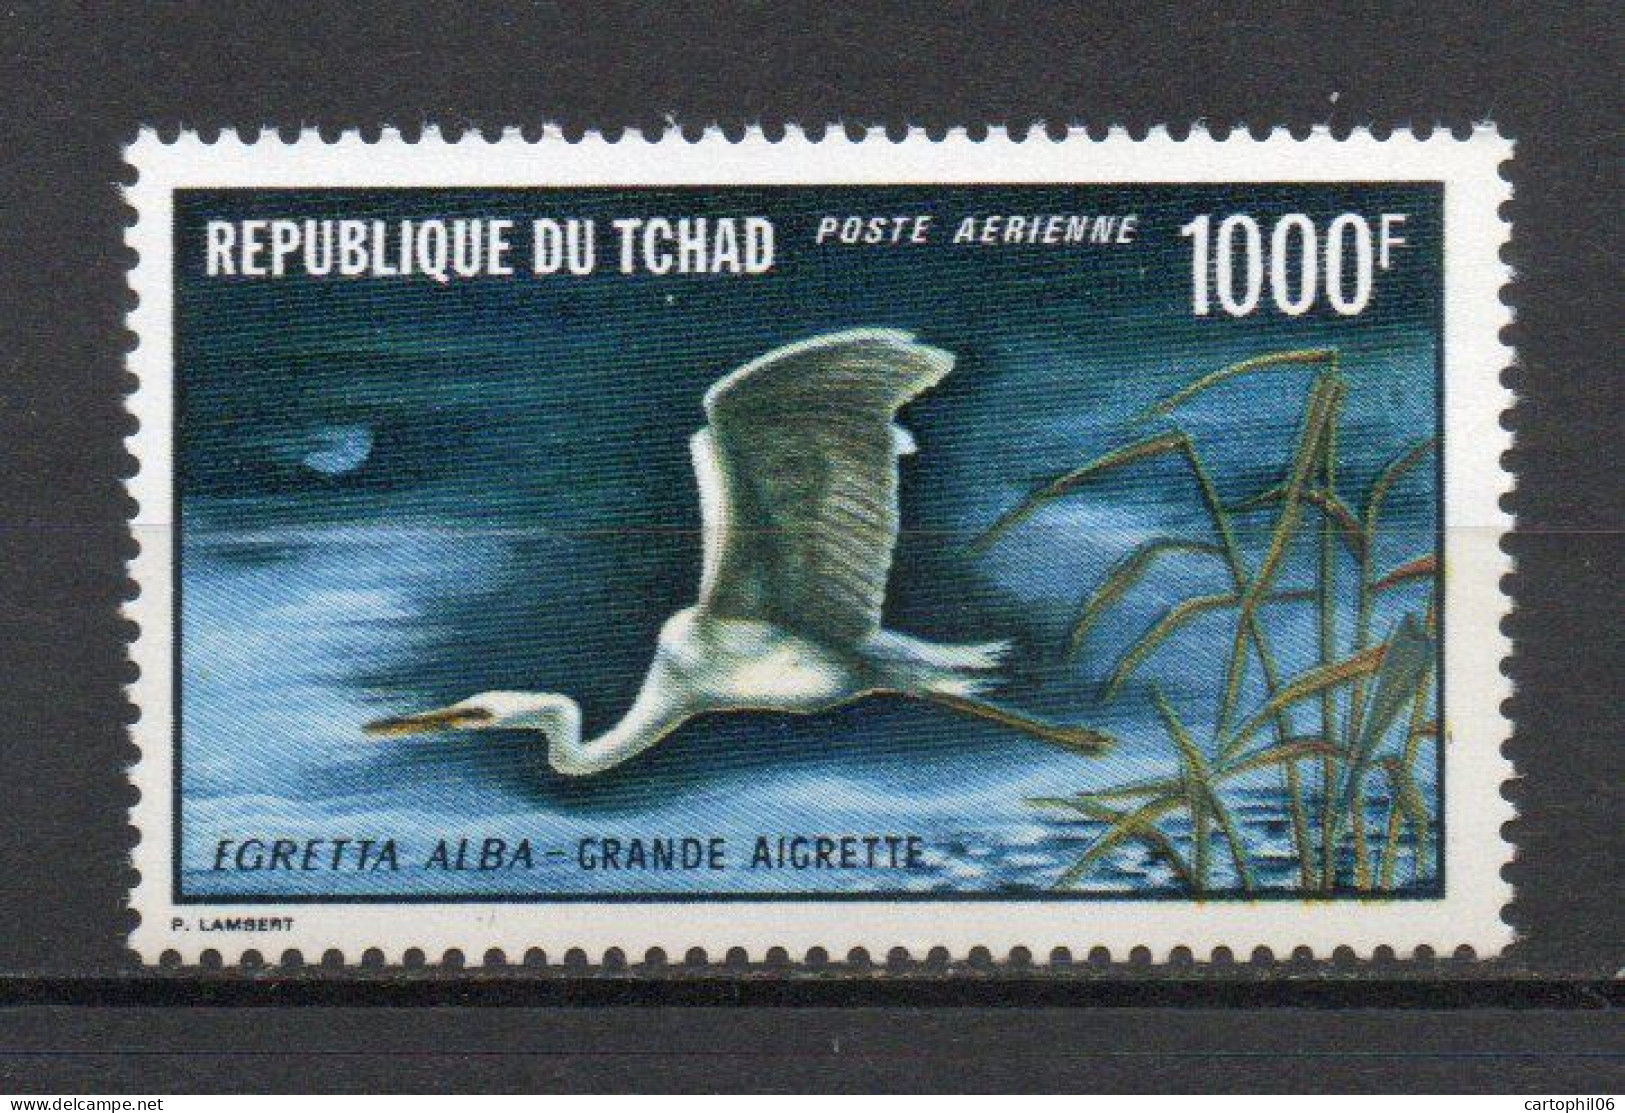 - TCHAD / OISEAUX Poste Aérienne N° 88 Neuf ** MNH - 1000 F. Grande Aigrette 1971 - Cote 60,00 € - - Storks & Long-legged Wading Birds